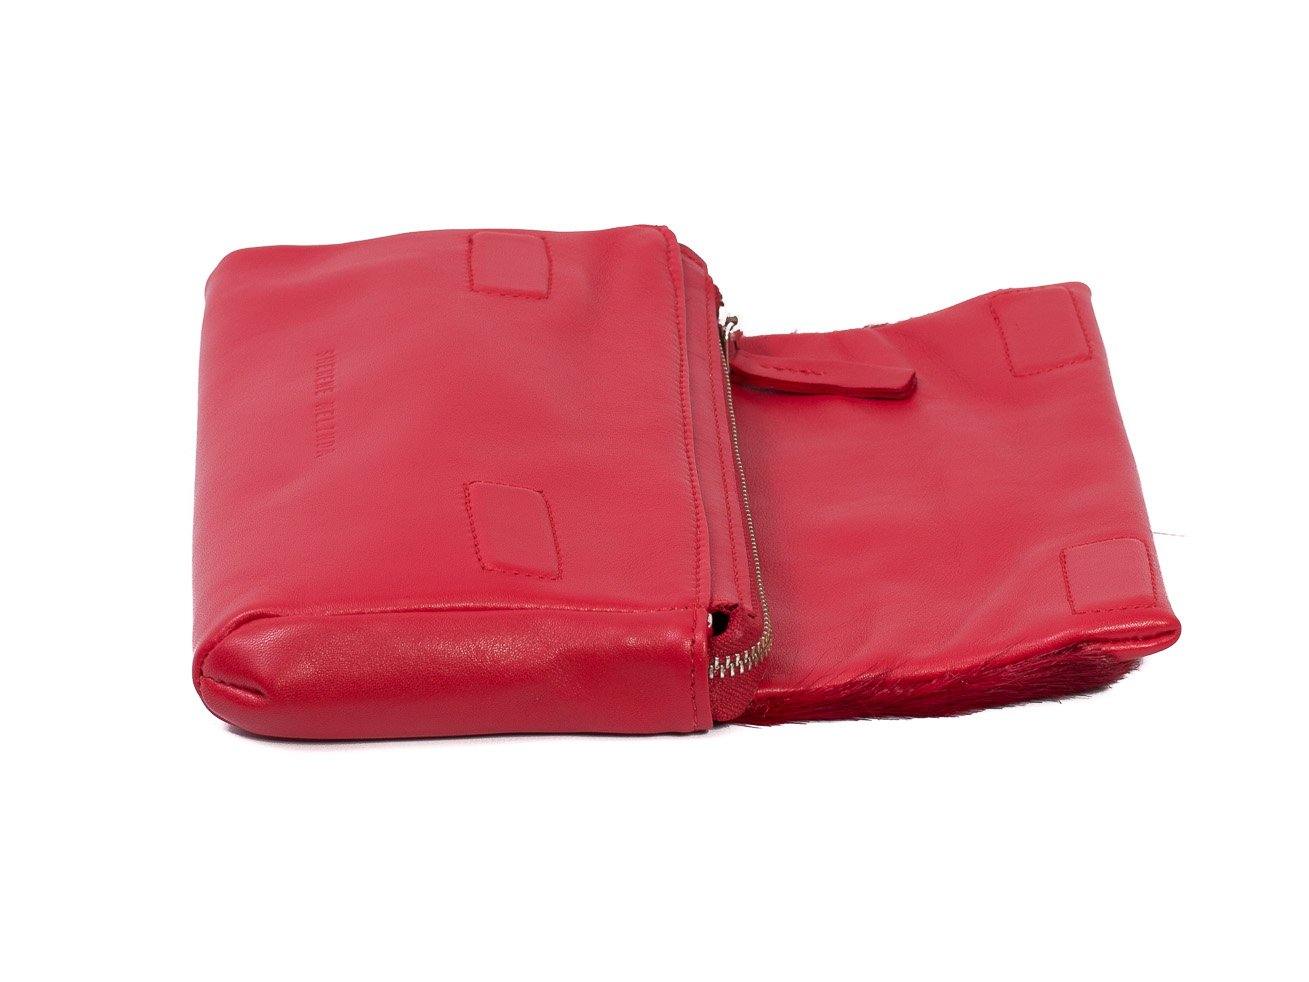 sherene melinda springbok hair-on-hide red leather Sophy SS18 Clutch Bag open